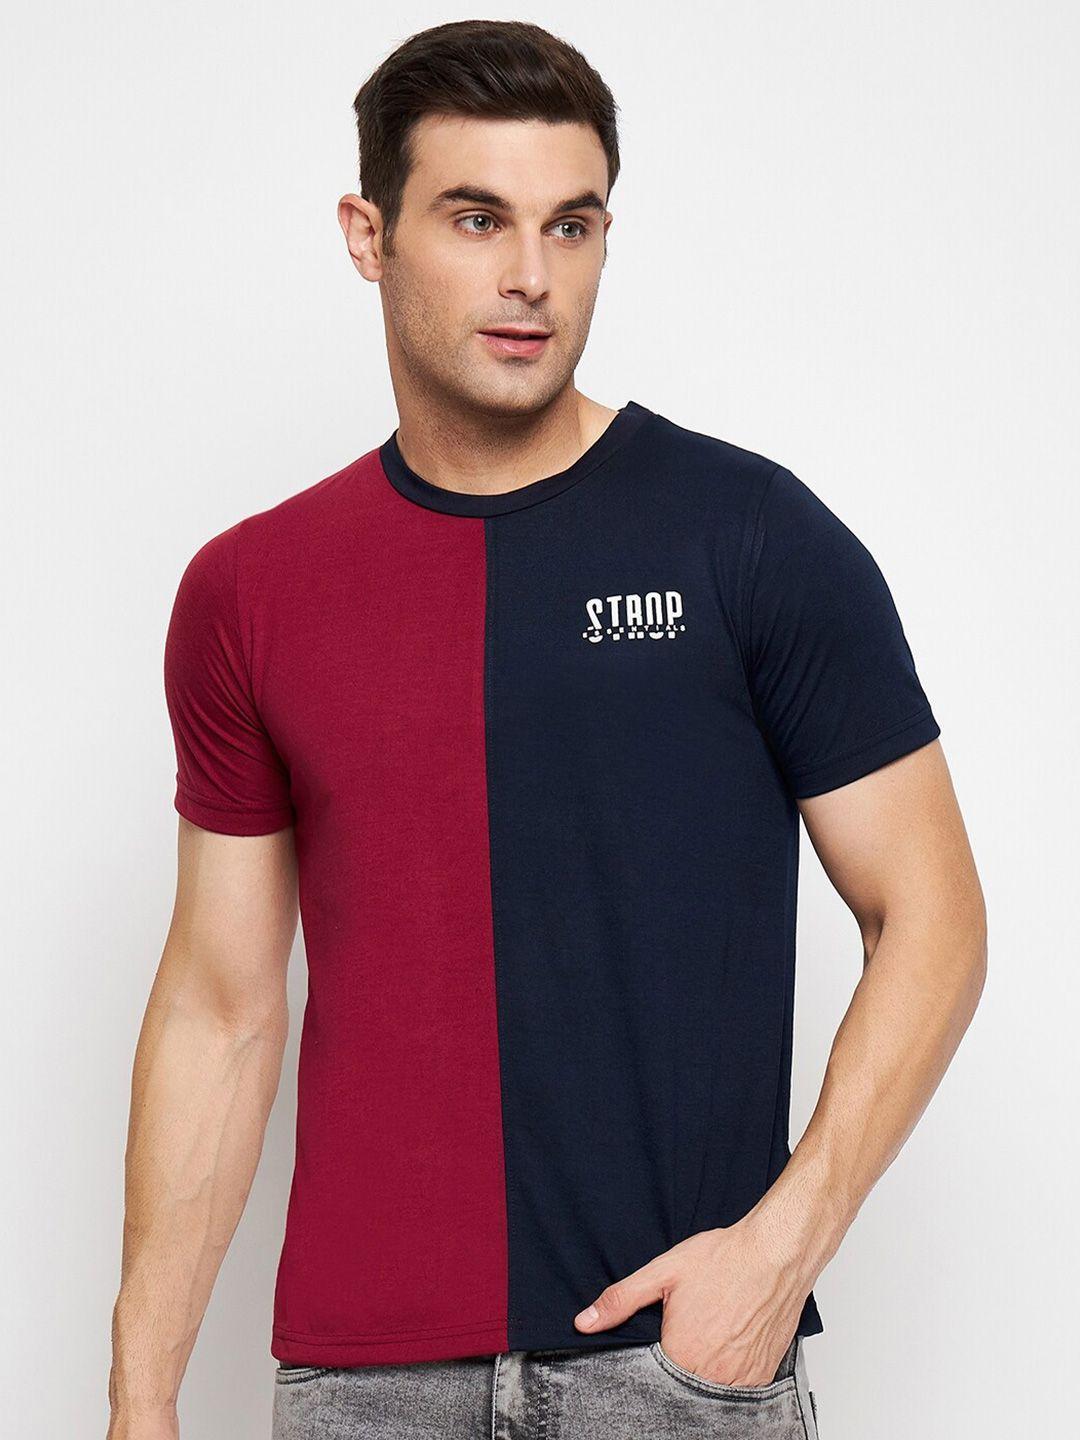 strop colourblocked cotton t-shirt